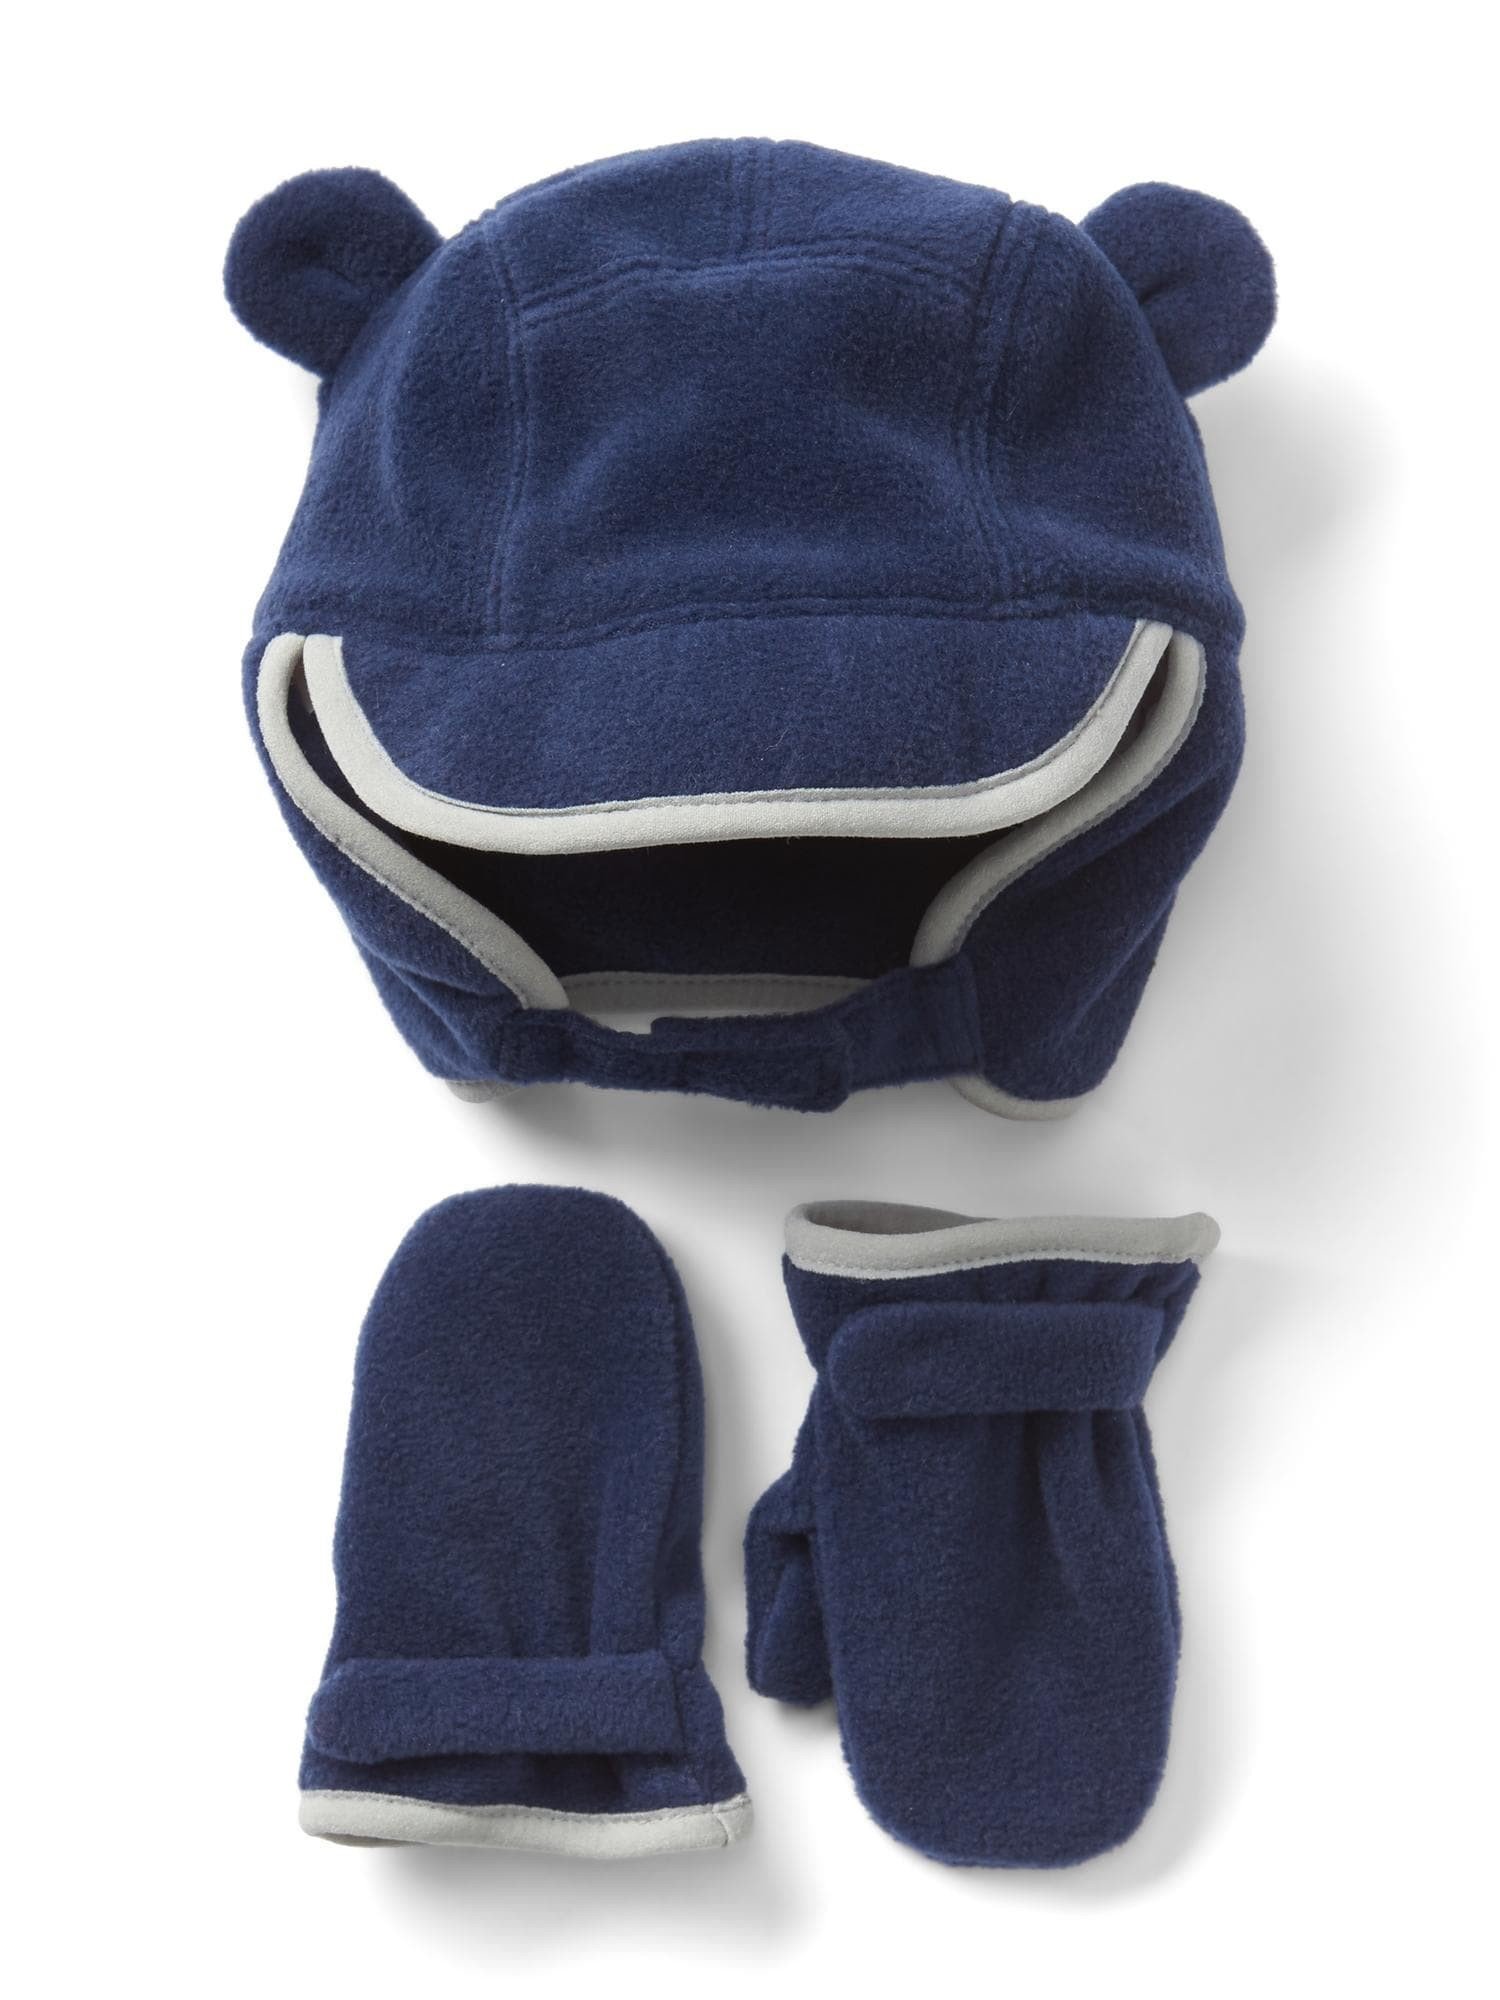 Pro Fleece  şapka ve eldiven seti product image